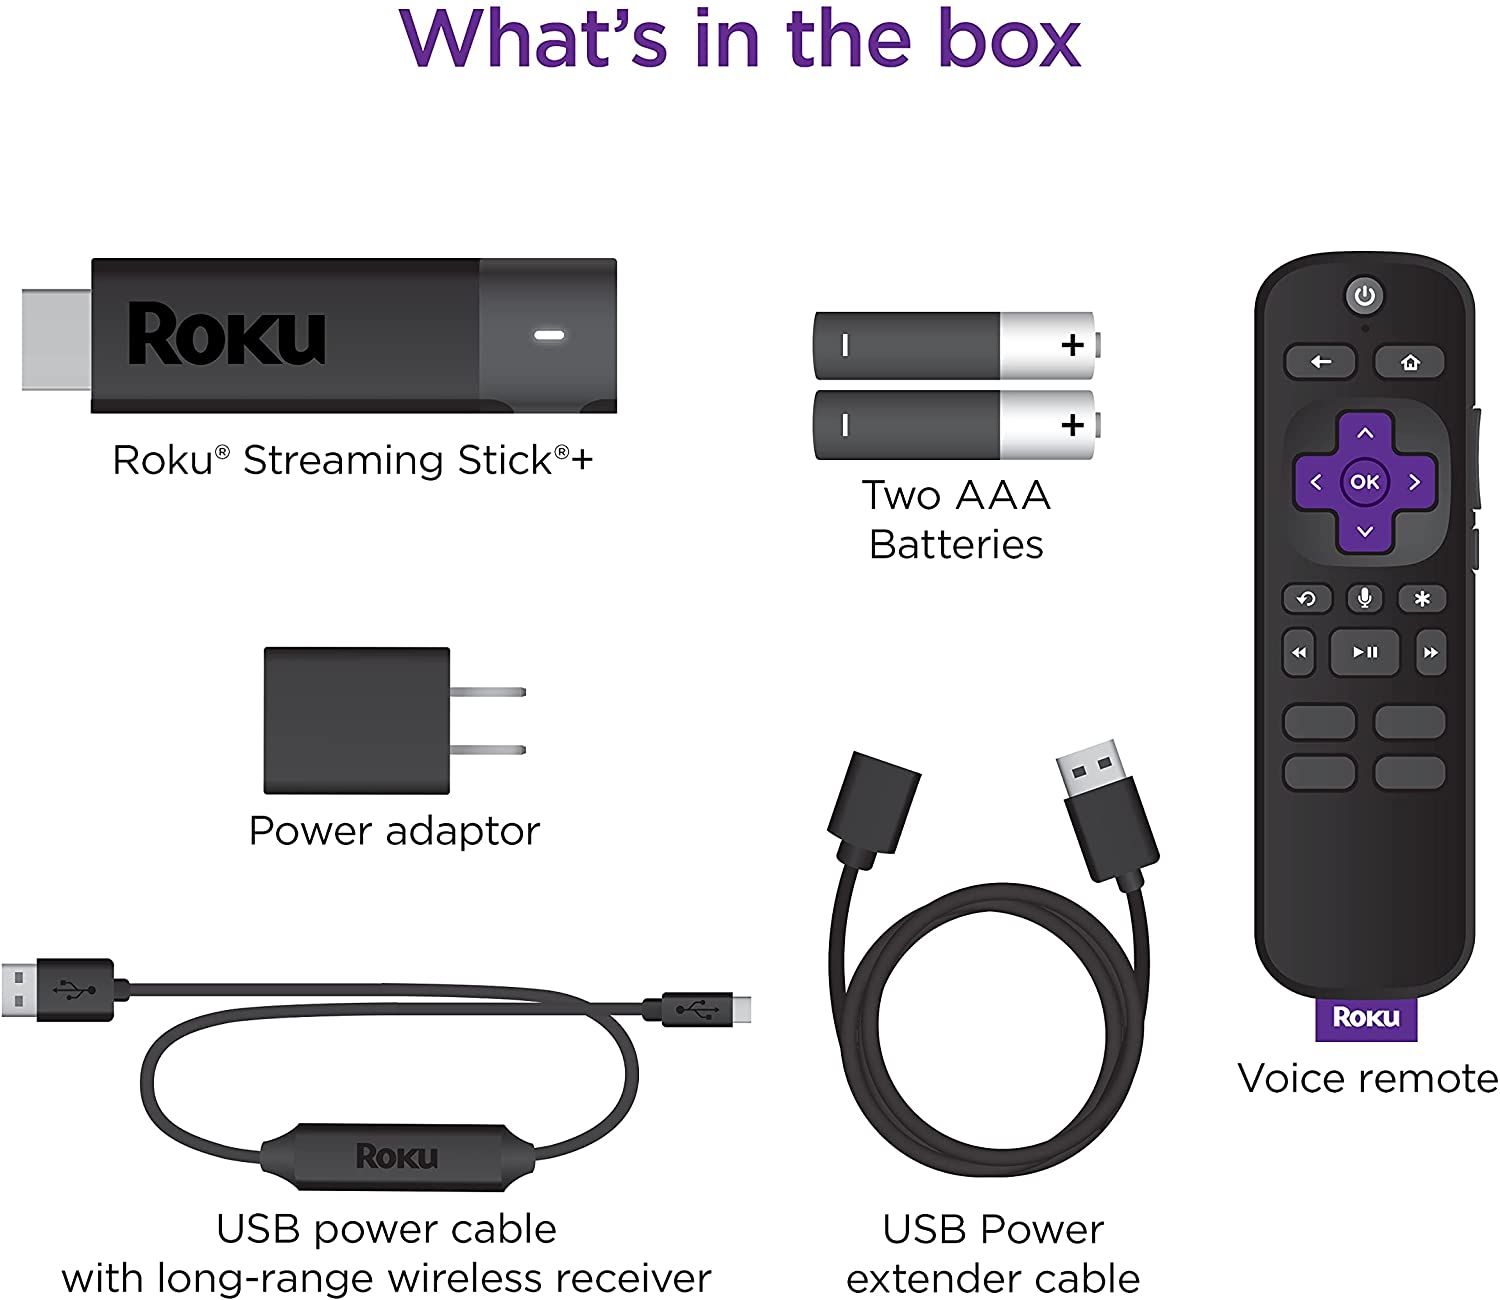 Roku Streaming Stick+ box contents